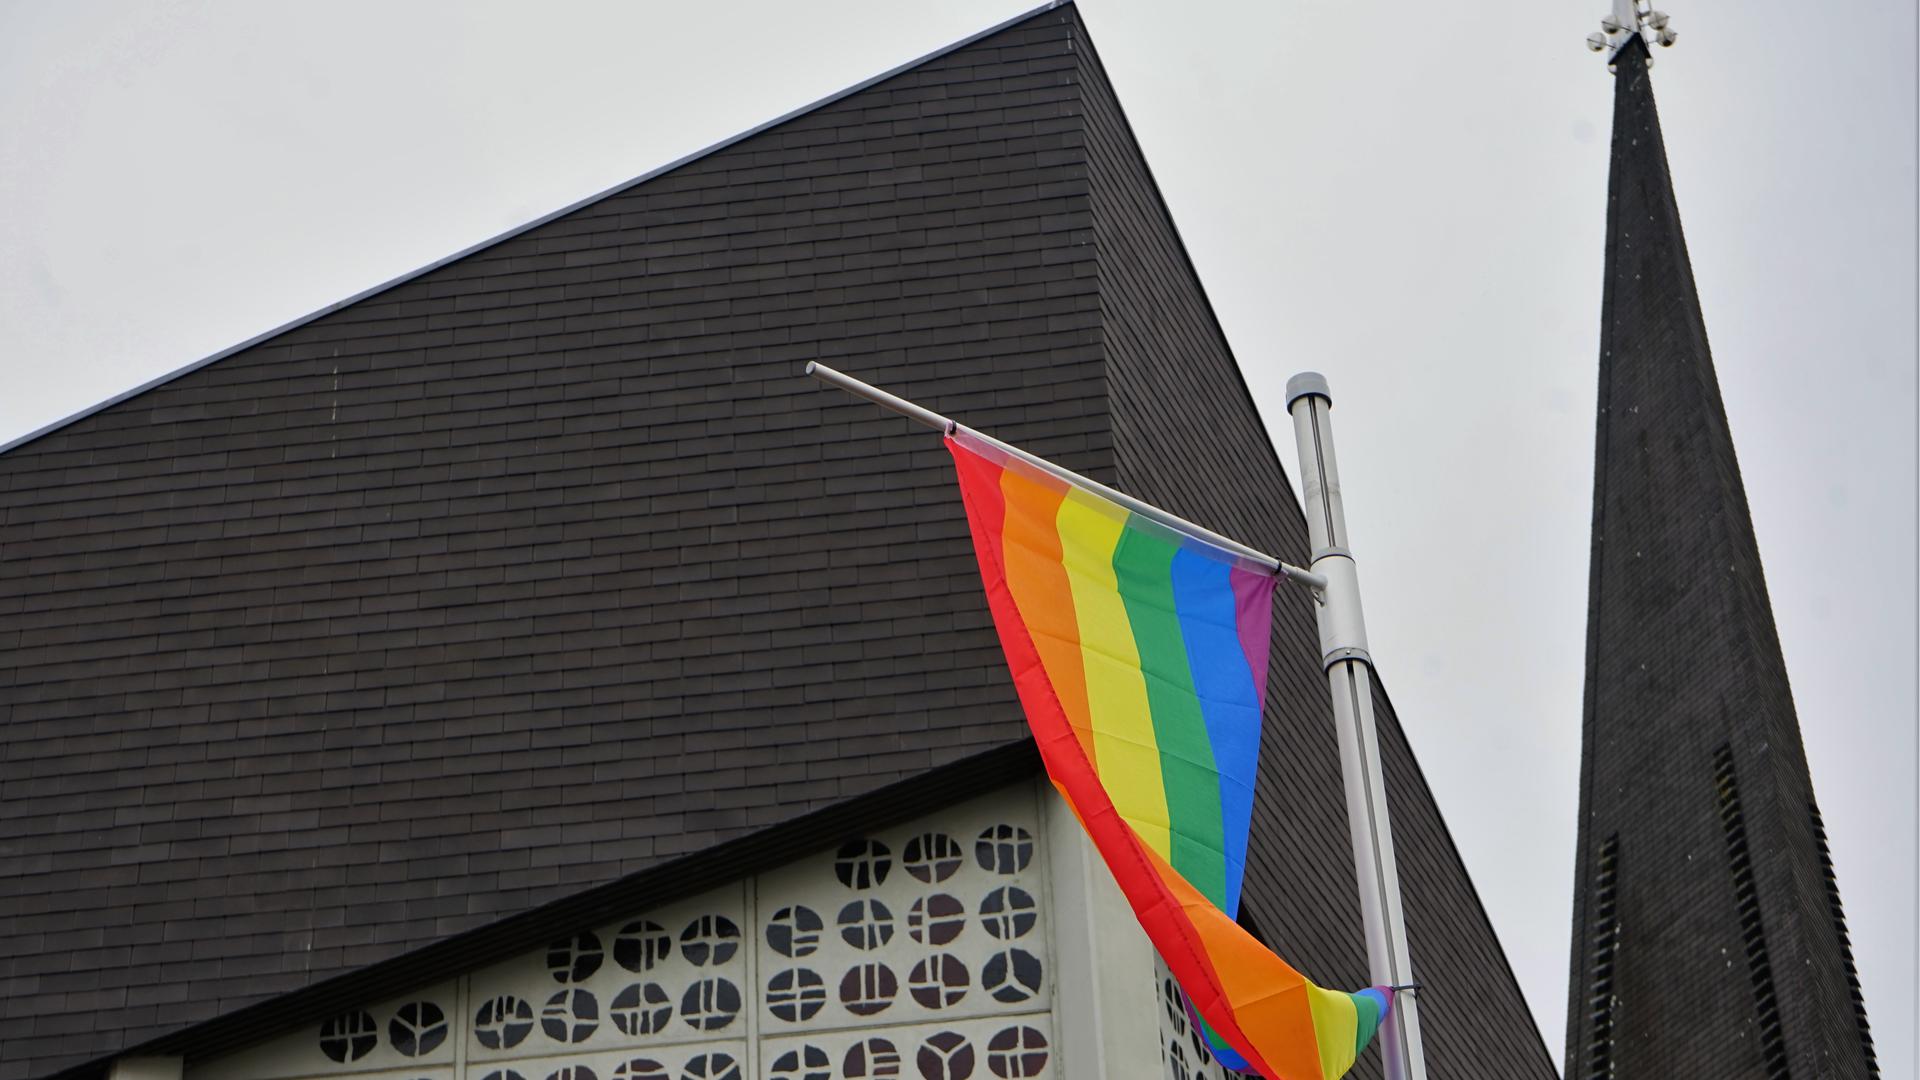 Regenbogenflagge vor St. Laurentius, Niederbühl #LoveIsNoSin